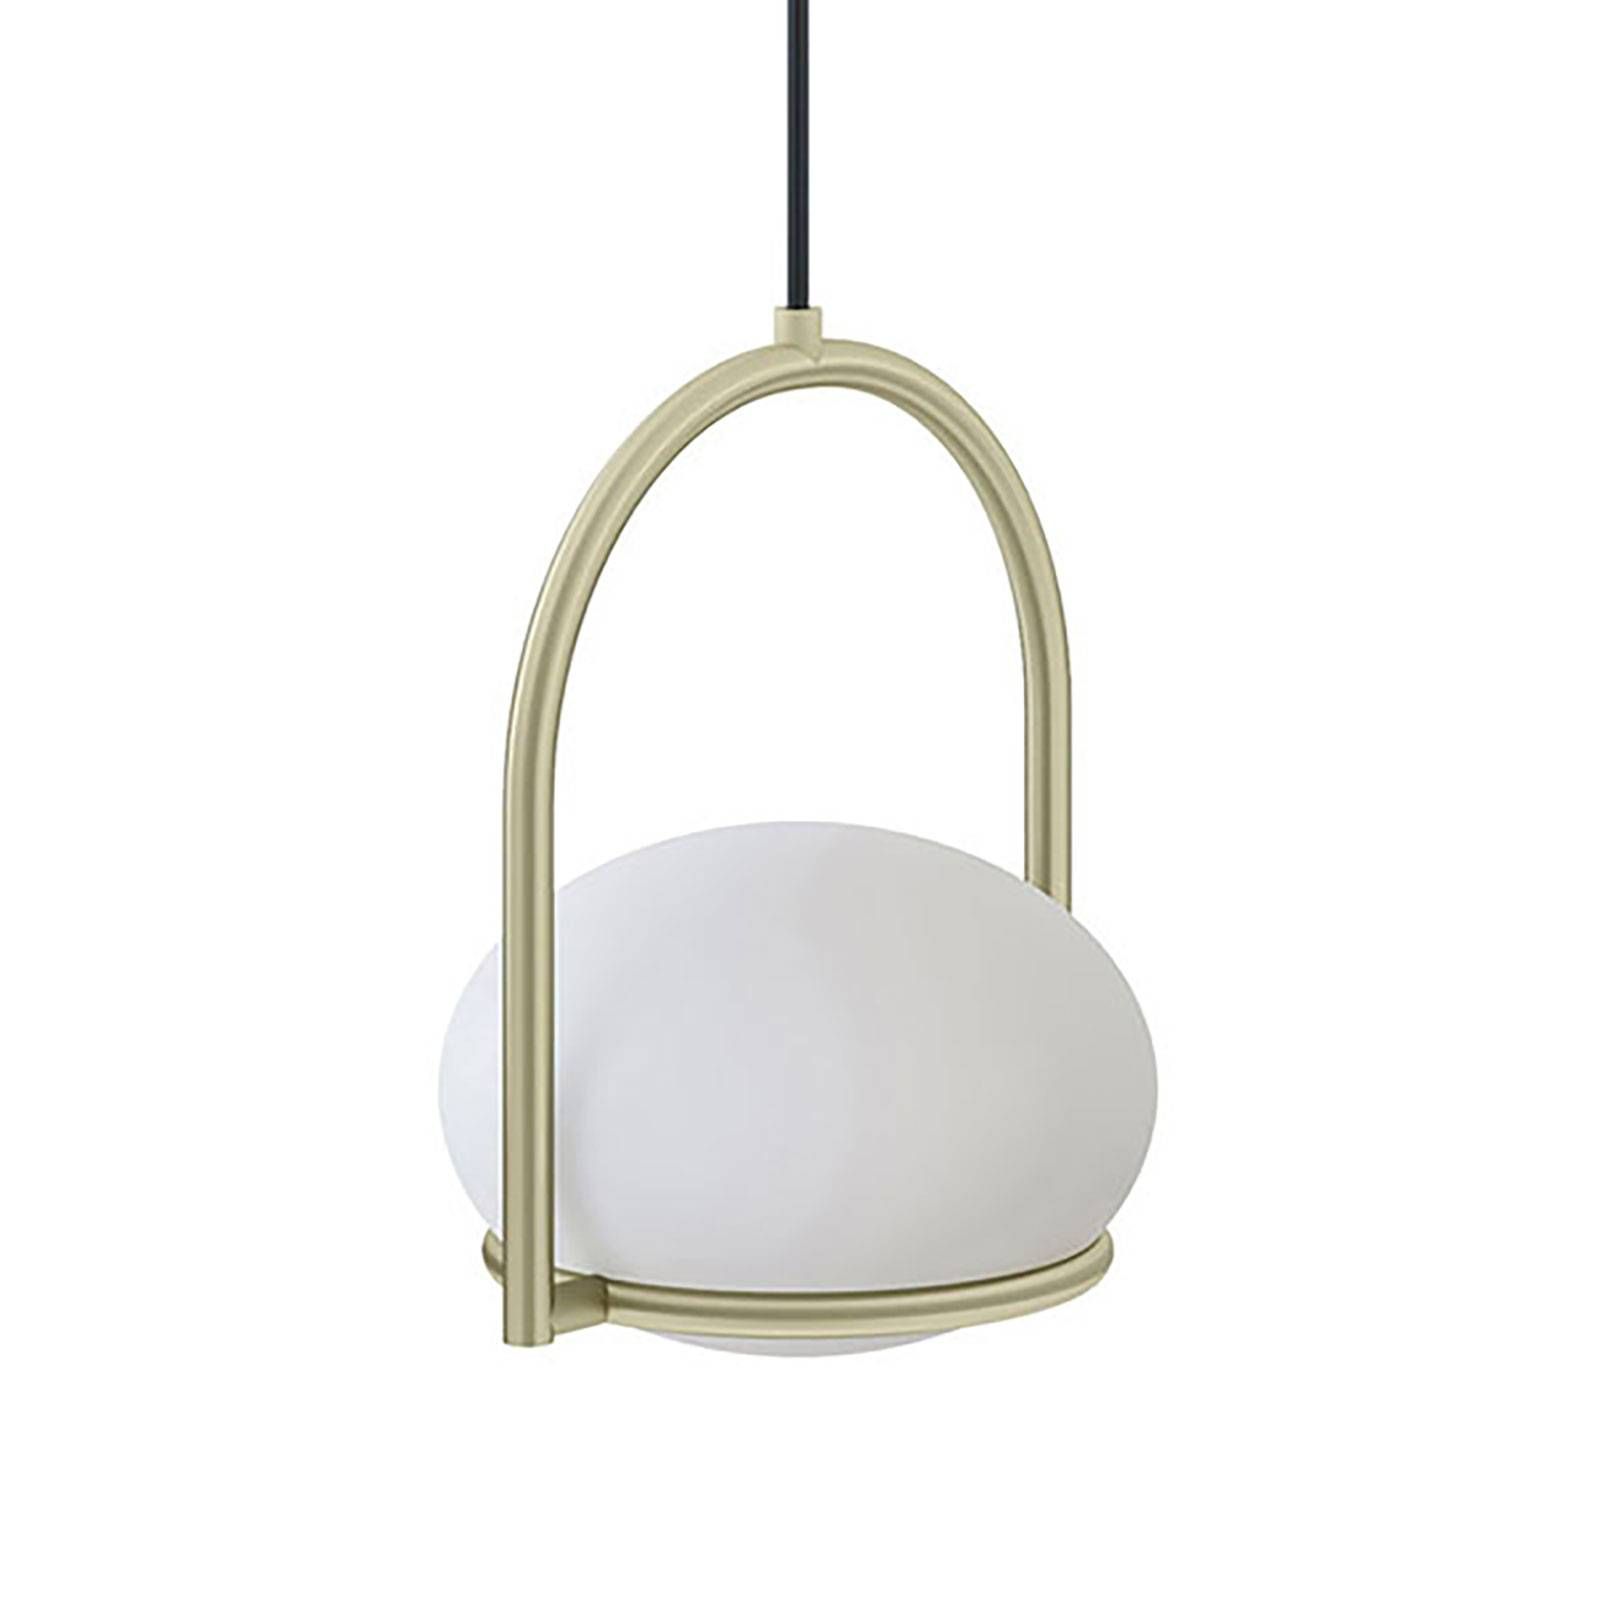 LEDS-C4 Coco Single závesná lampa, zlatá/biela, Obývacia izba / jedáleň, oceľ, hliník, polykarbonát, E14, 7W, K: 25cm